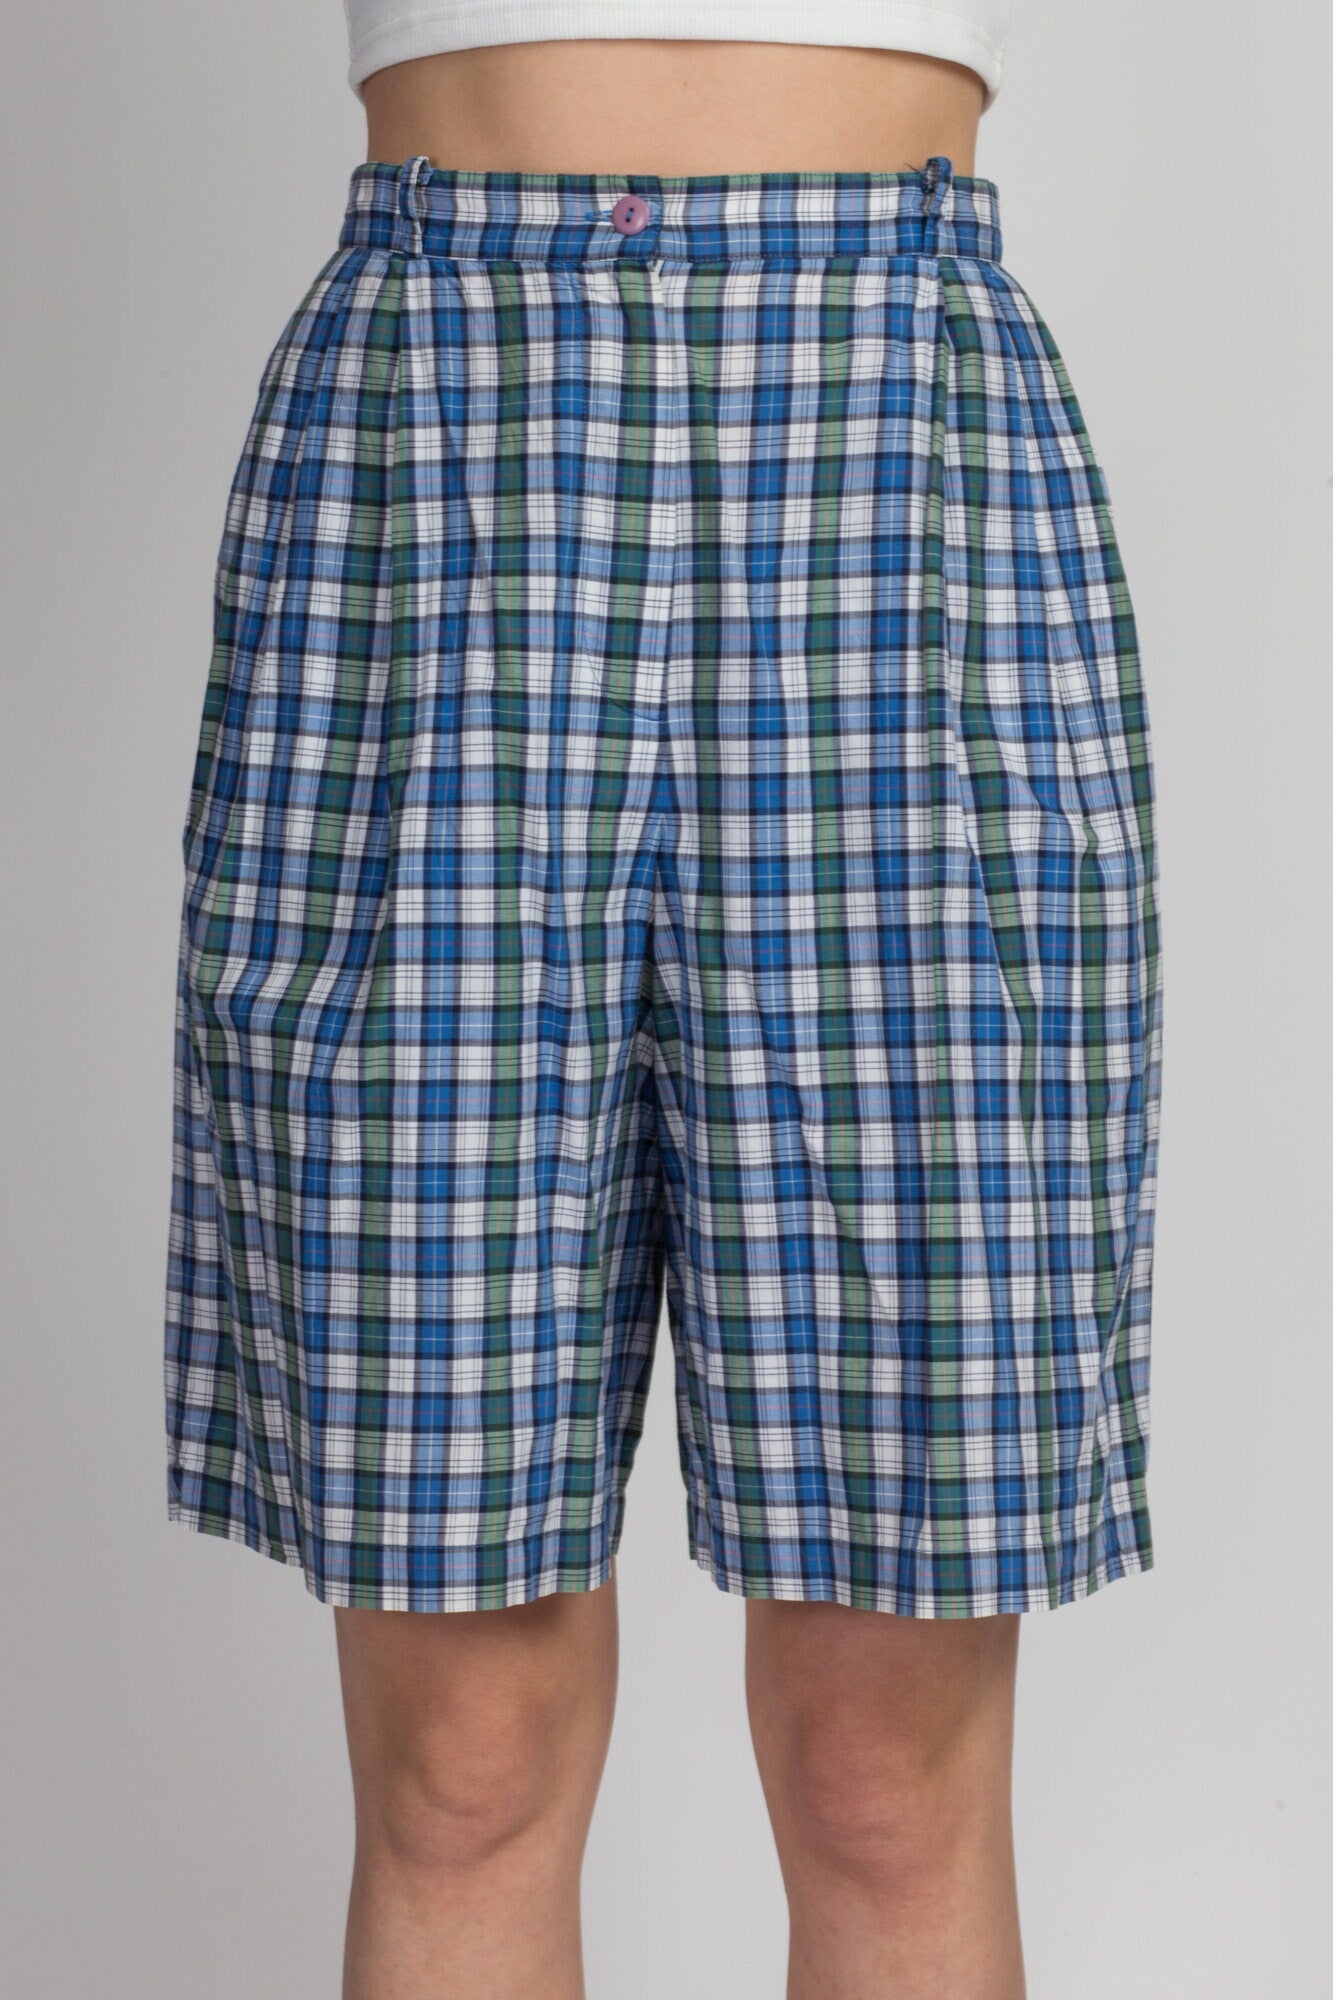 90s Blue Plaid Cotton Shorts - Small to Medium, 27" 